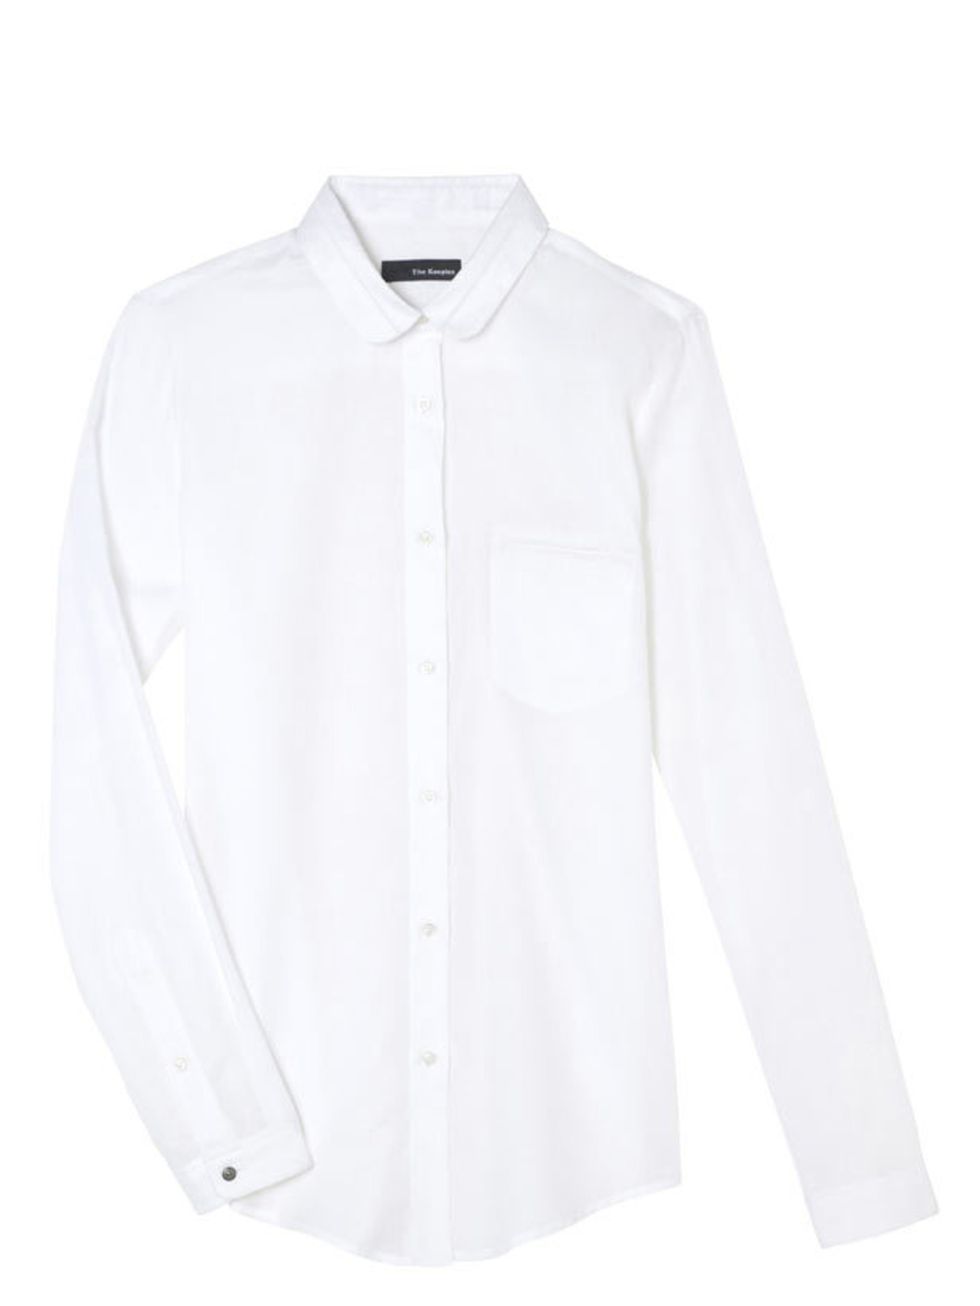 <p><a href="http://www.thekooples.co.uk/women-1/shirt/light-round-collar-shirt-with-overlay.html">The Kooples</a> rounded collar shirt, £120</p>